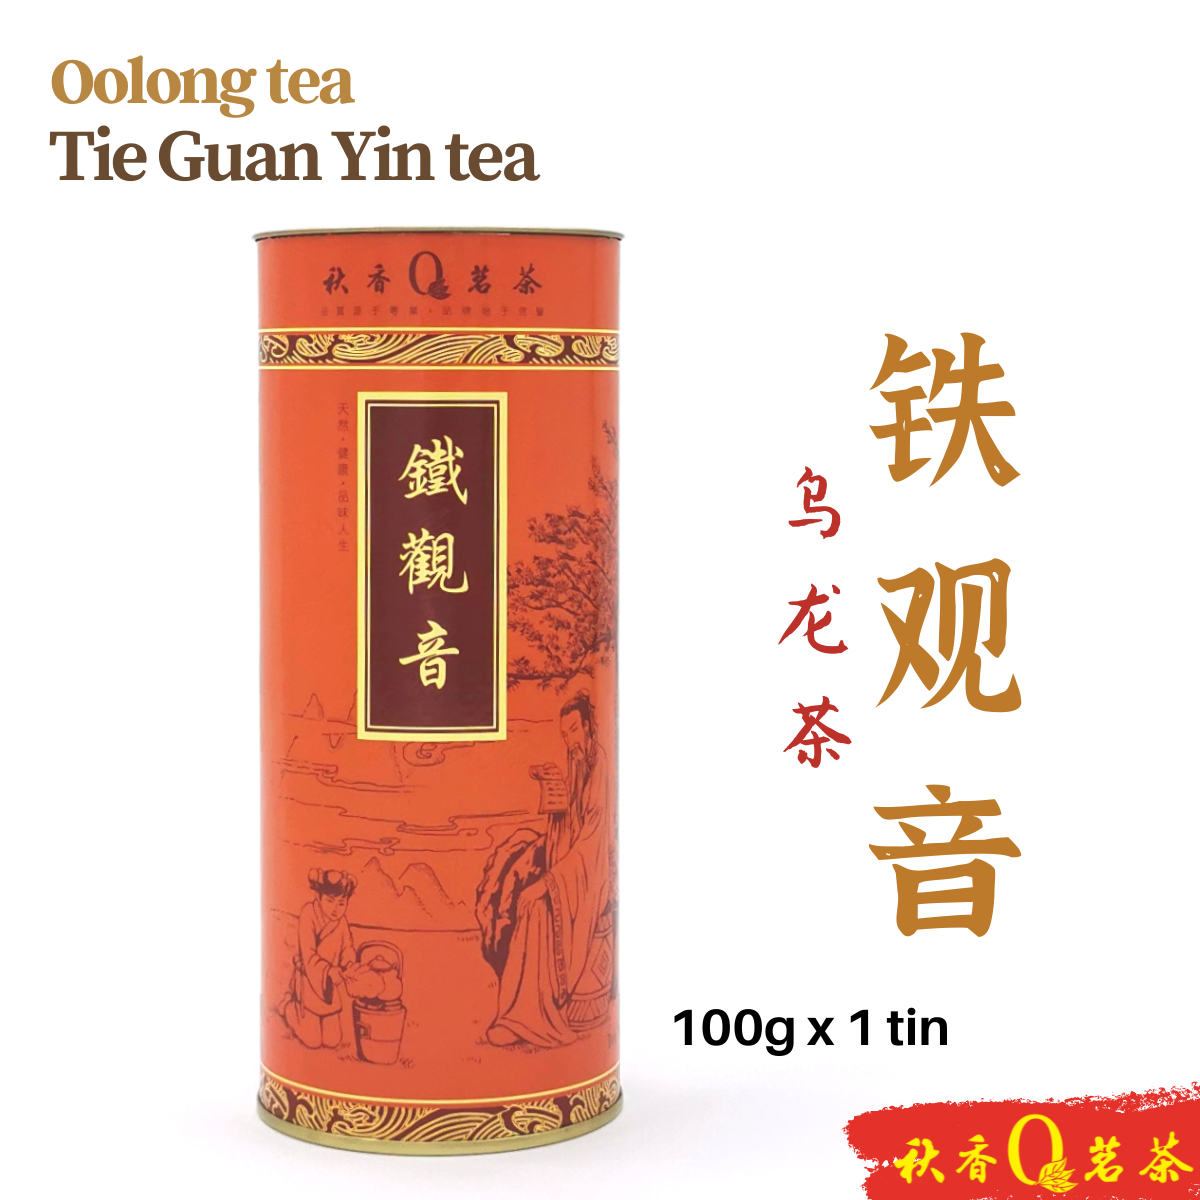 铁观音 Tie Guan Yin tea【100g】 |【乌龙茶 Oolong Tea】